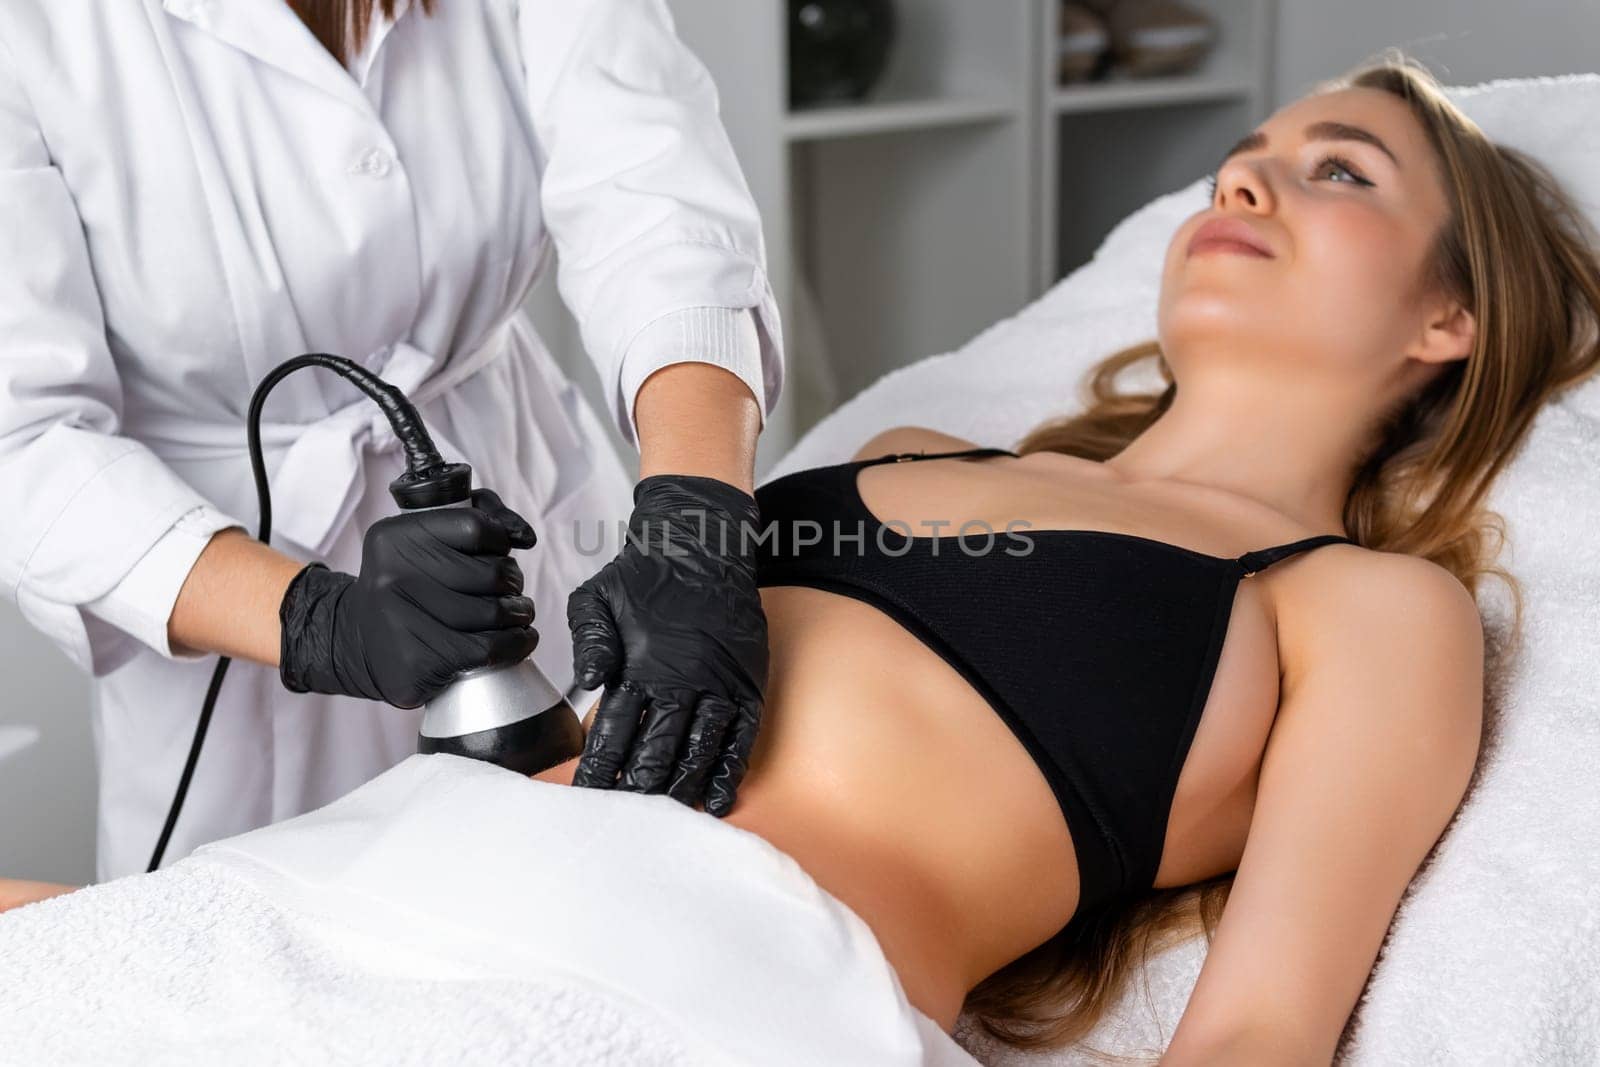 Young woman undergoes ultrasound cavitation procedure for skin tightening by vladimka